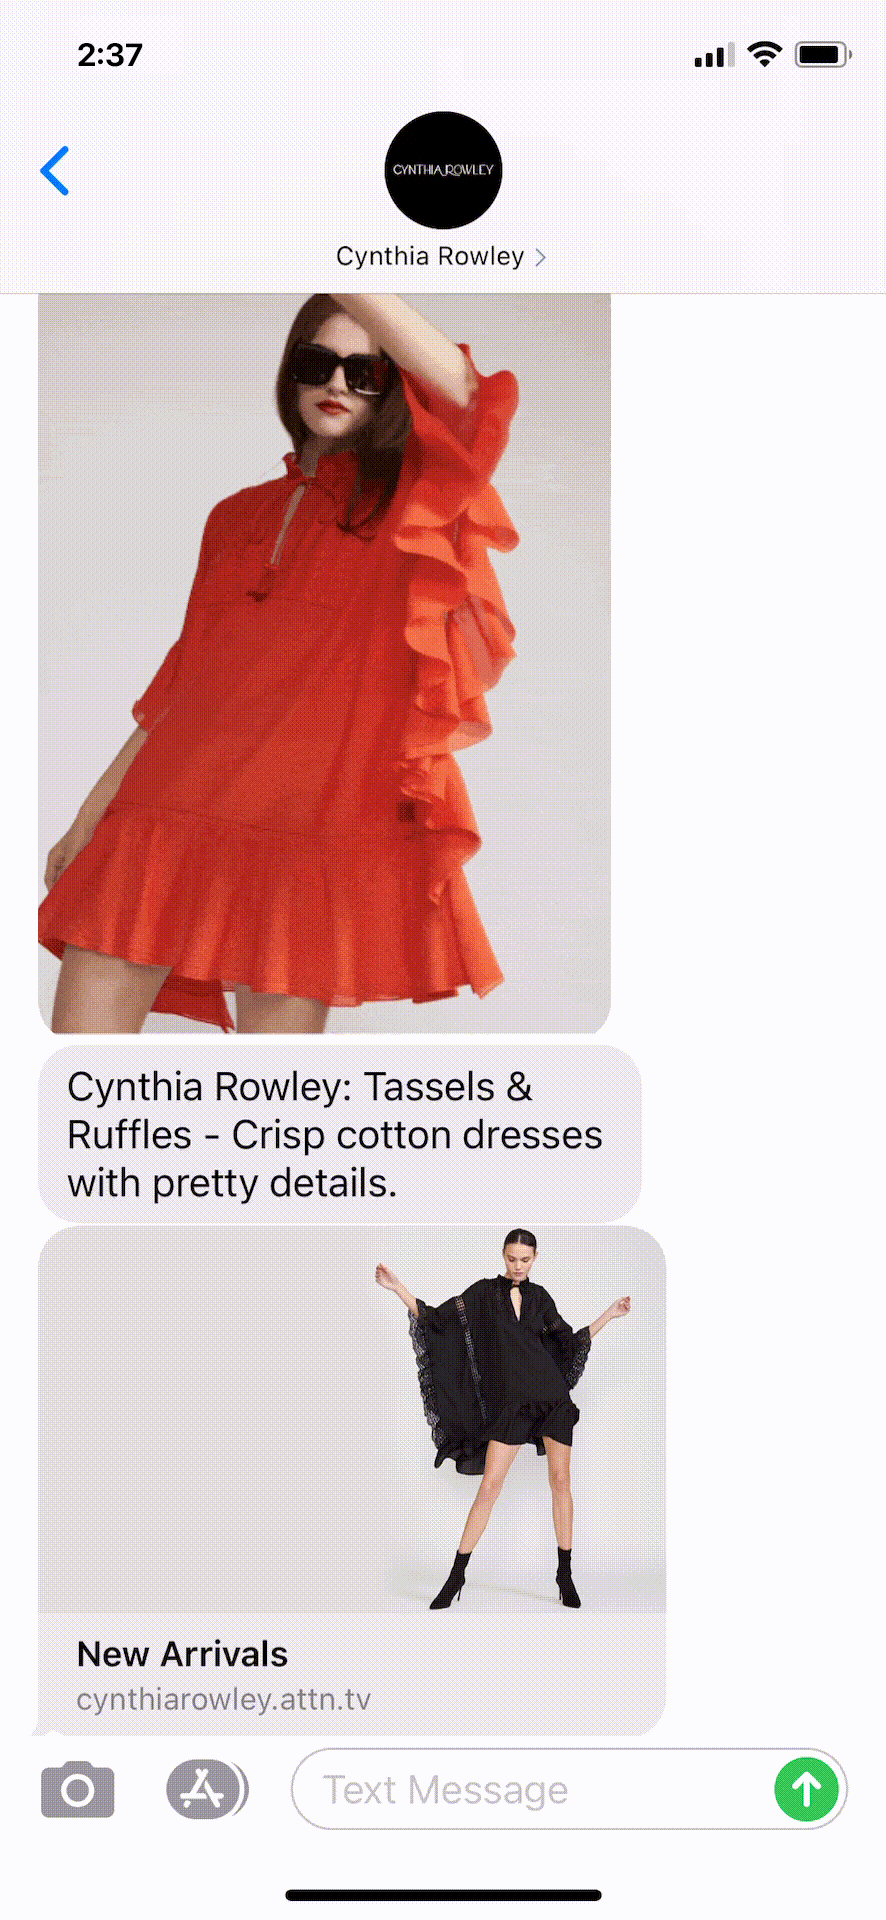 Cynthia-Rowley-Text-Message-Marketing-Example-03.31.2021